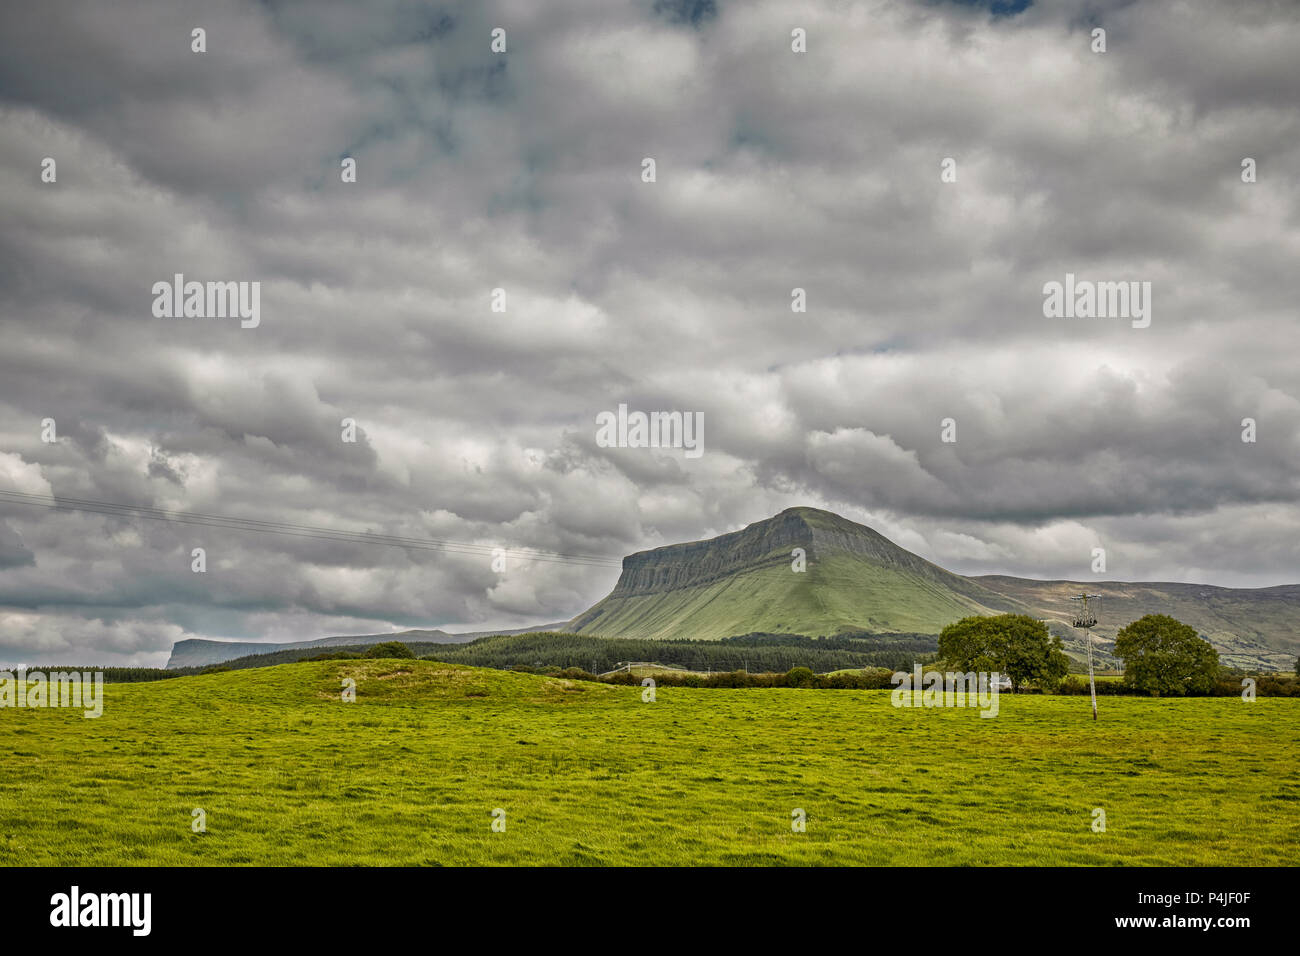 Ben Bulben Mountain in Sligo, Ireland, on the western coast Stock Photo